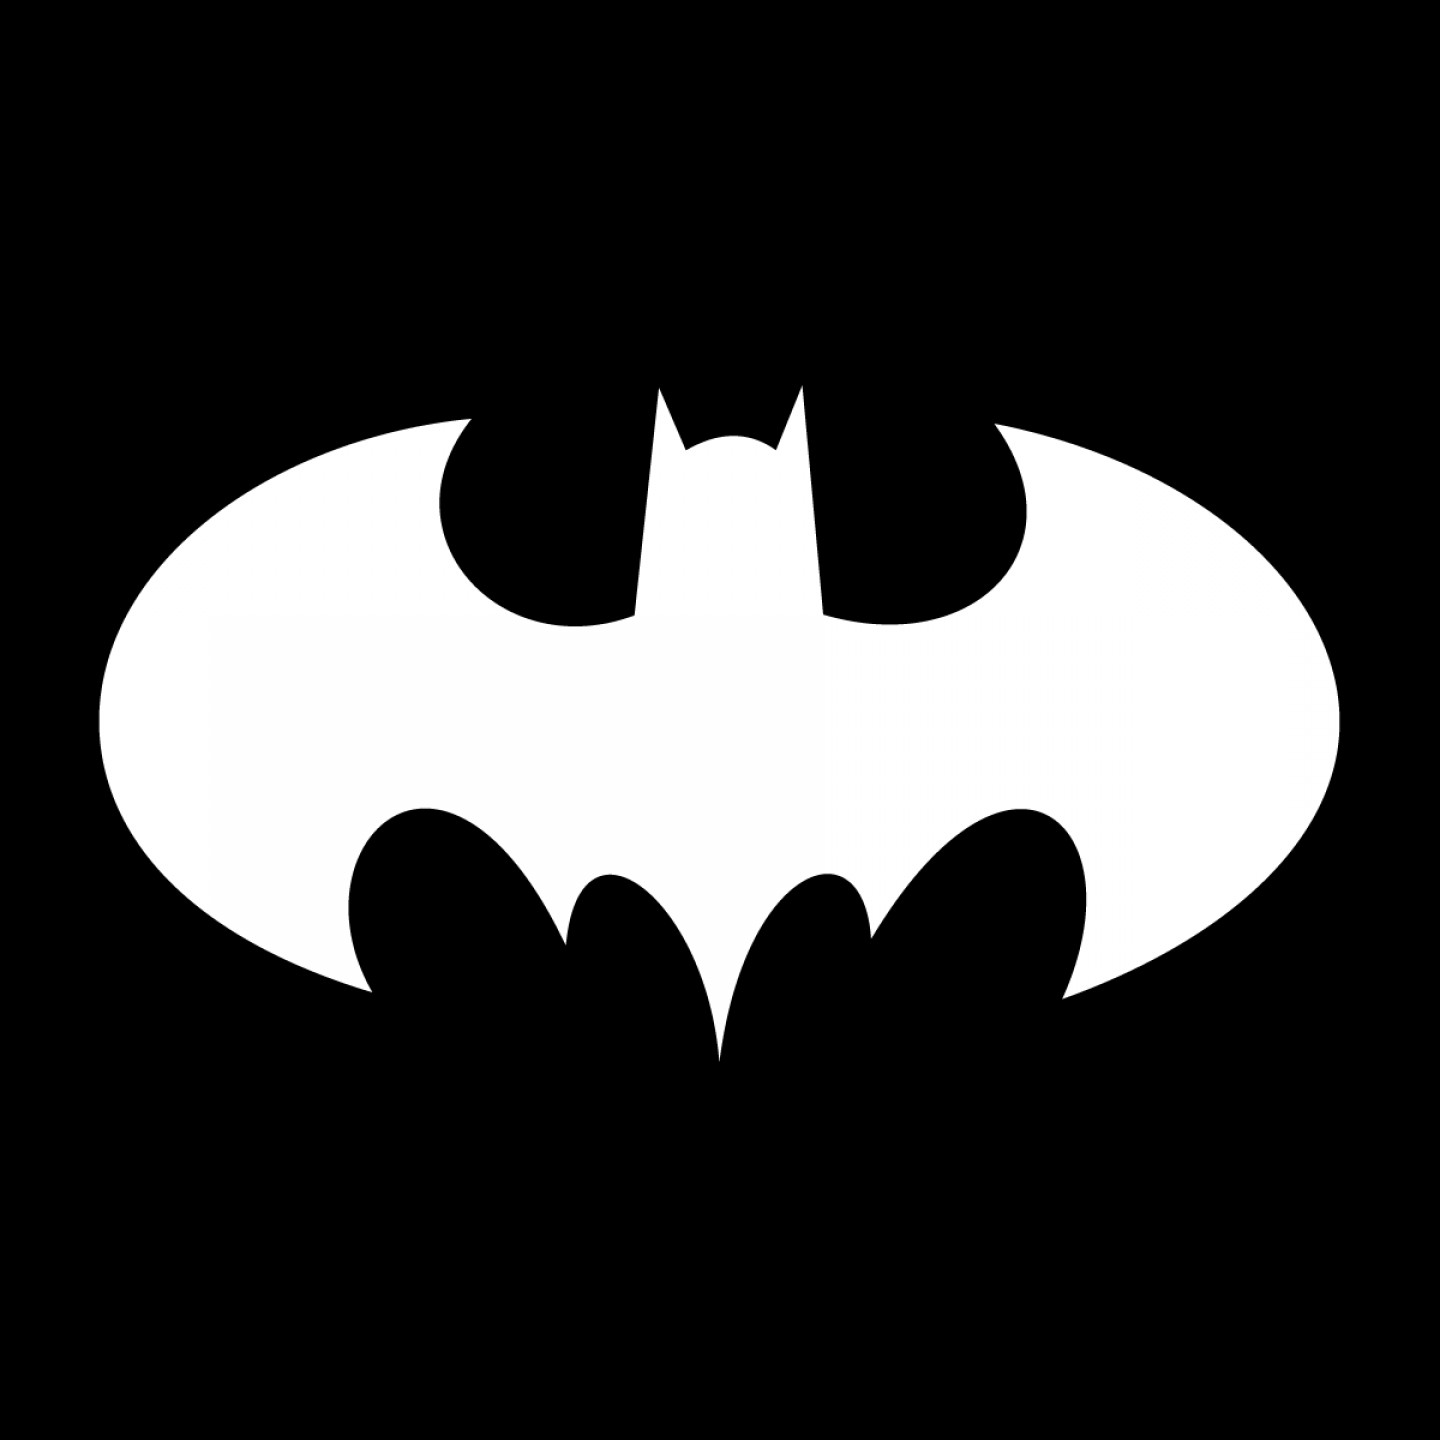 Bat Signal Vector at GetDrawings | Free download